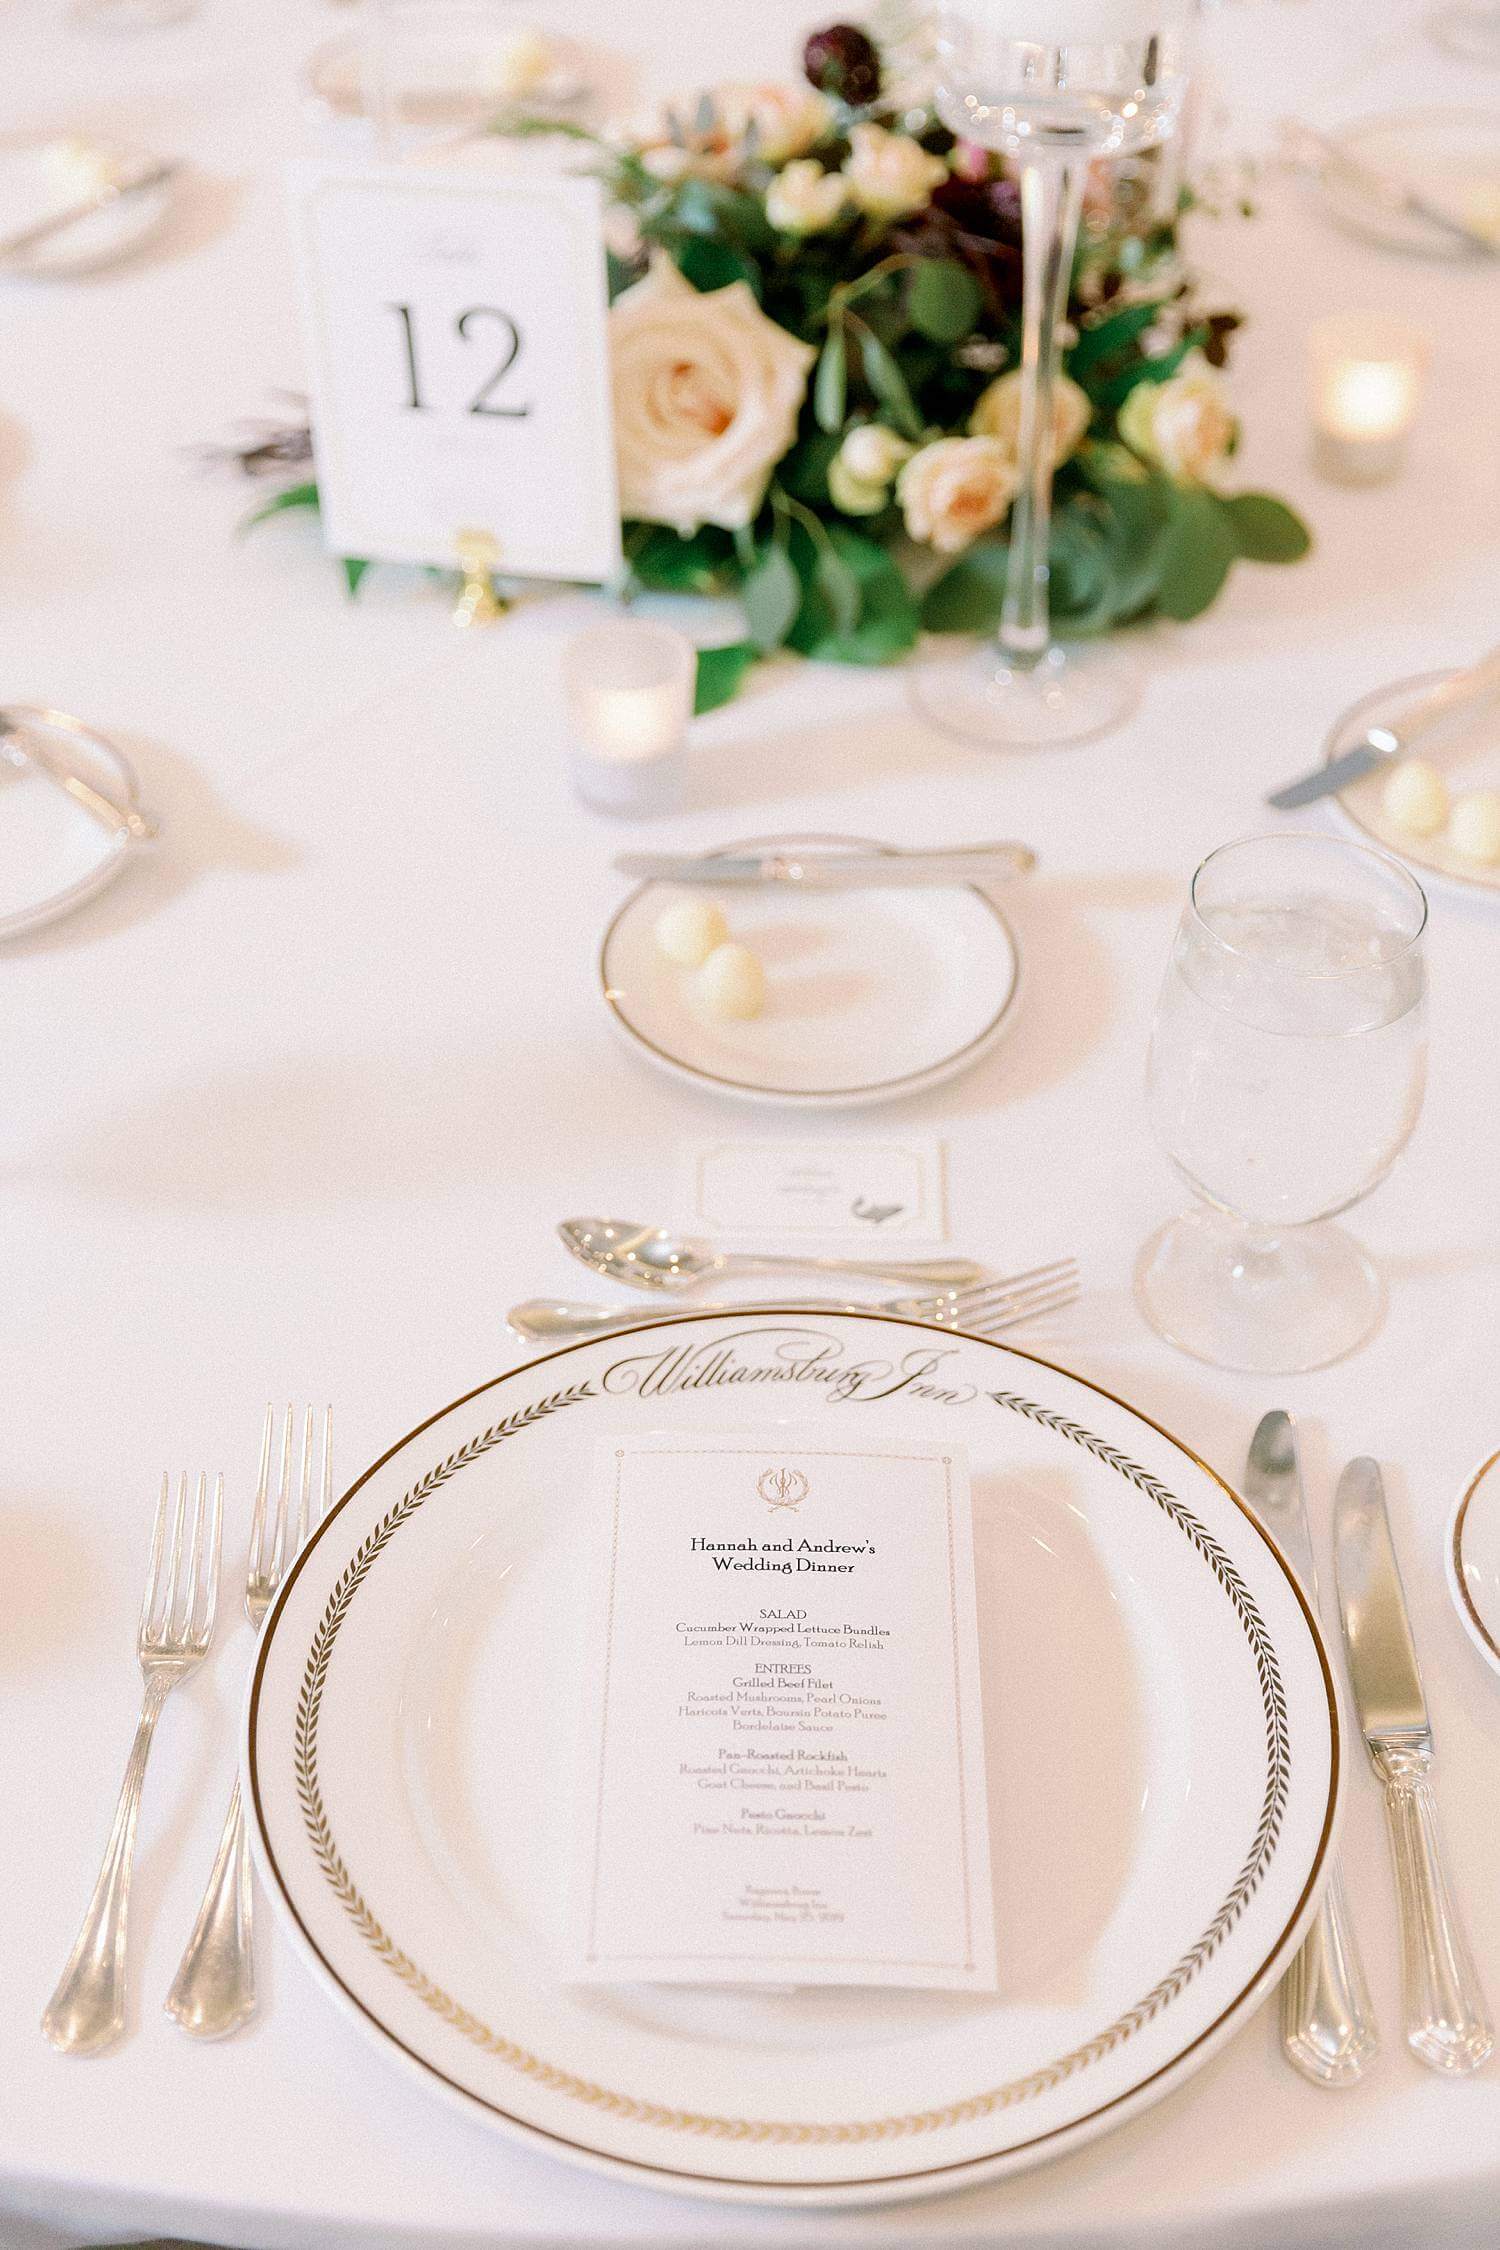 Reception details at a wedding at The Williamsburg Inn